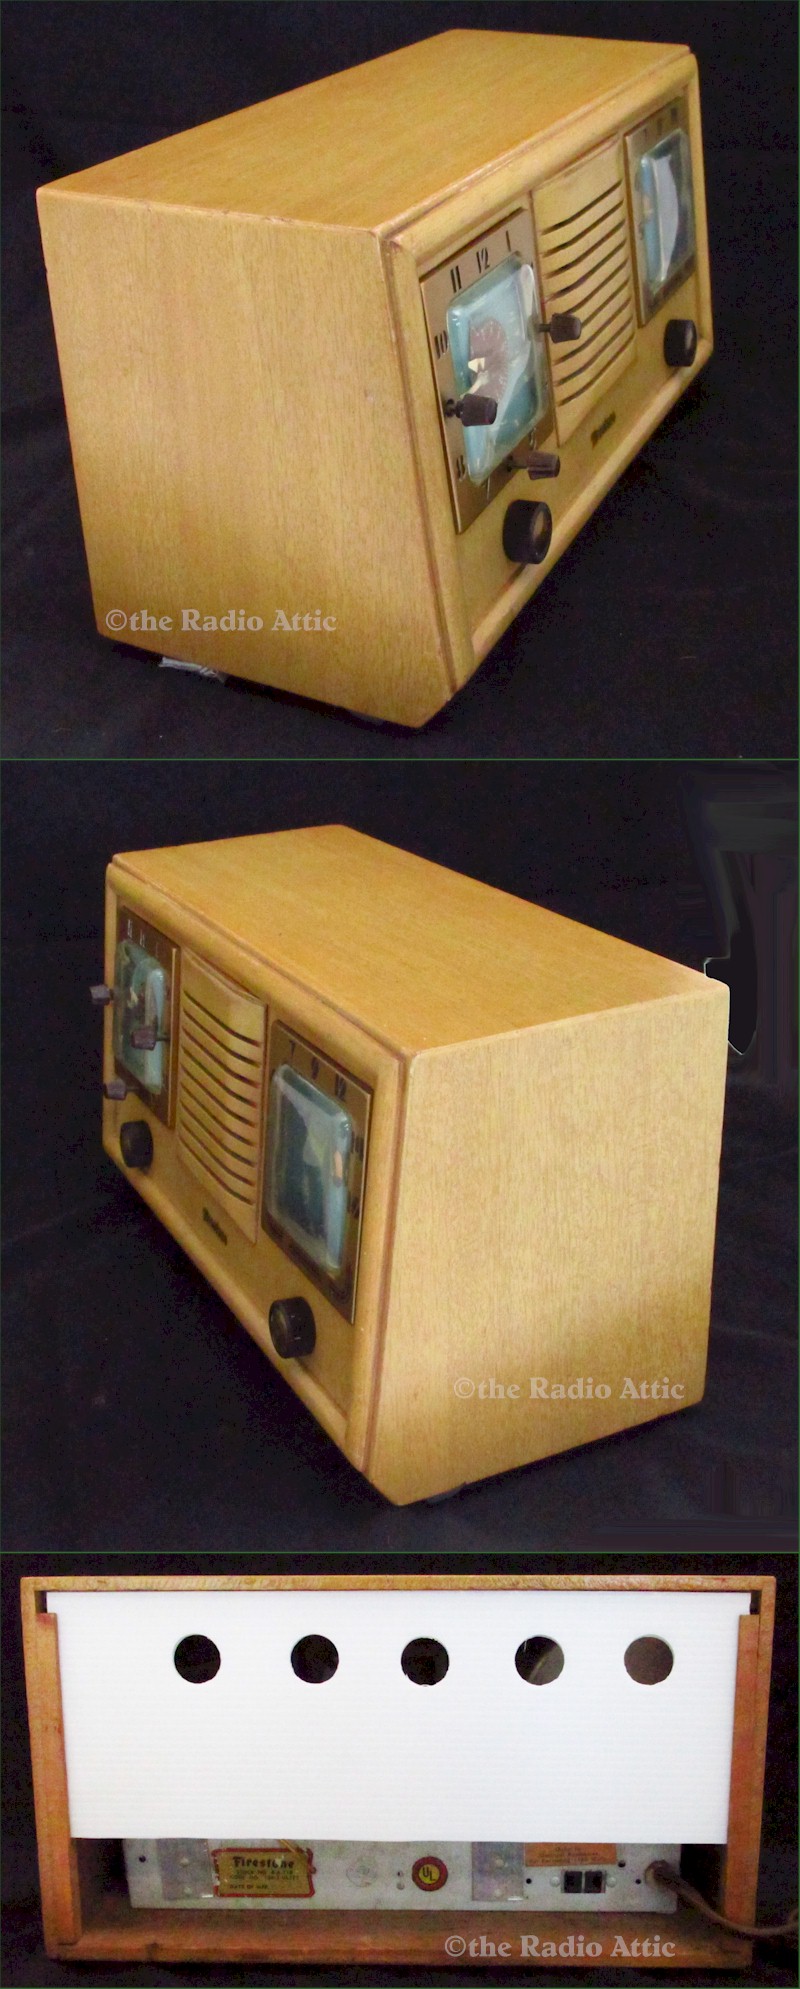 Firestone 4A110 Clock Radio (1952)